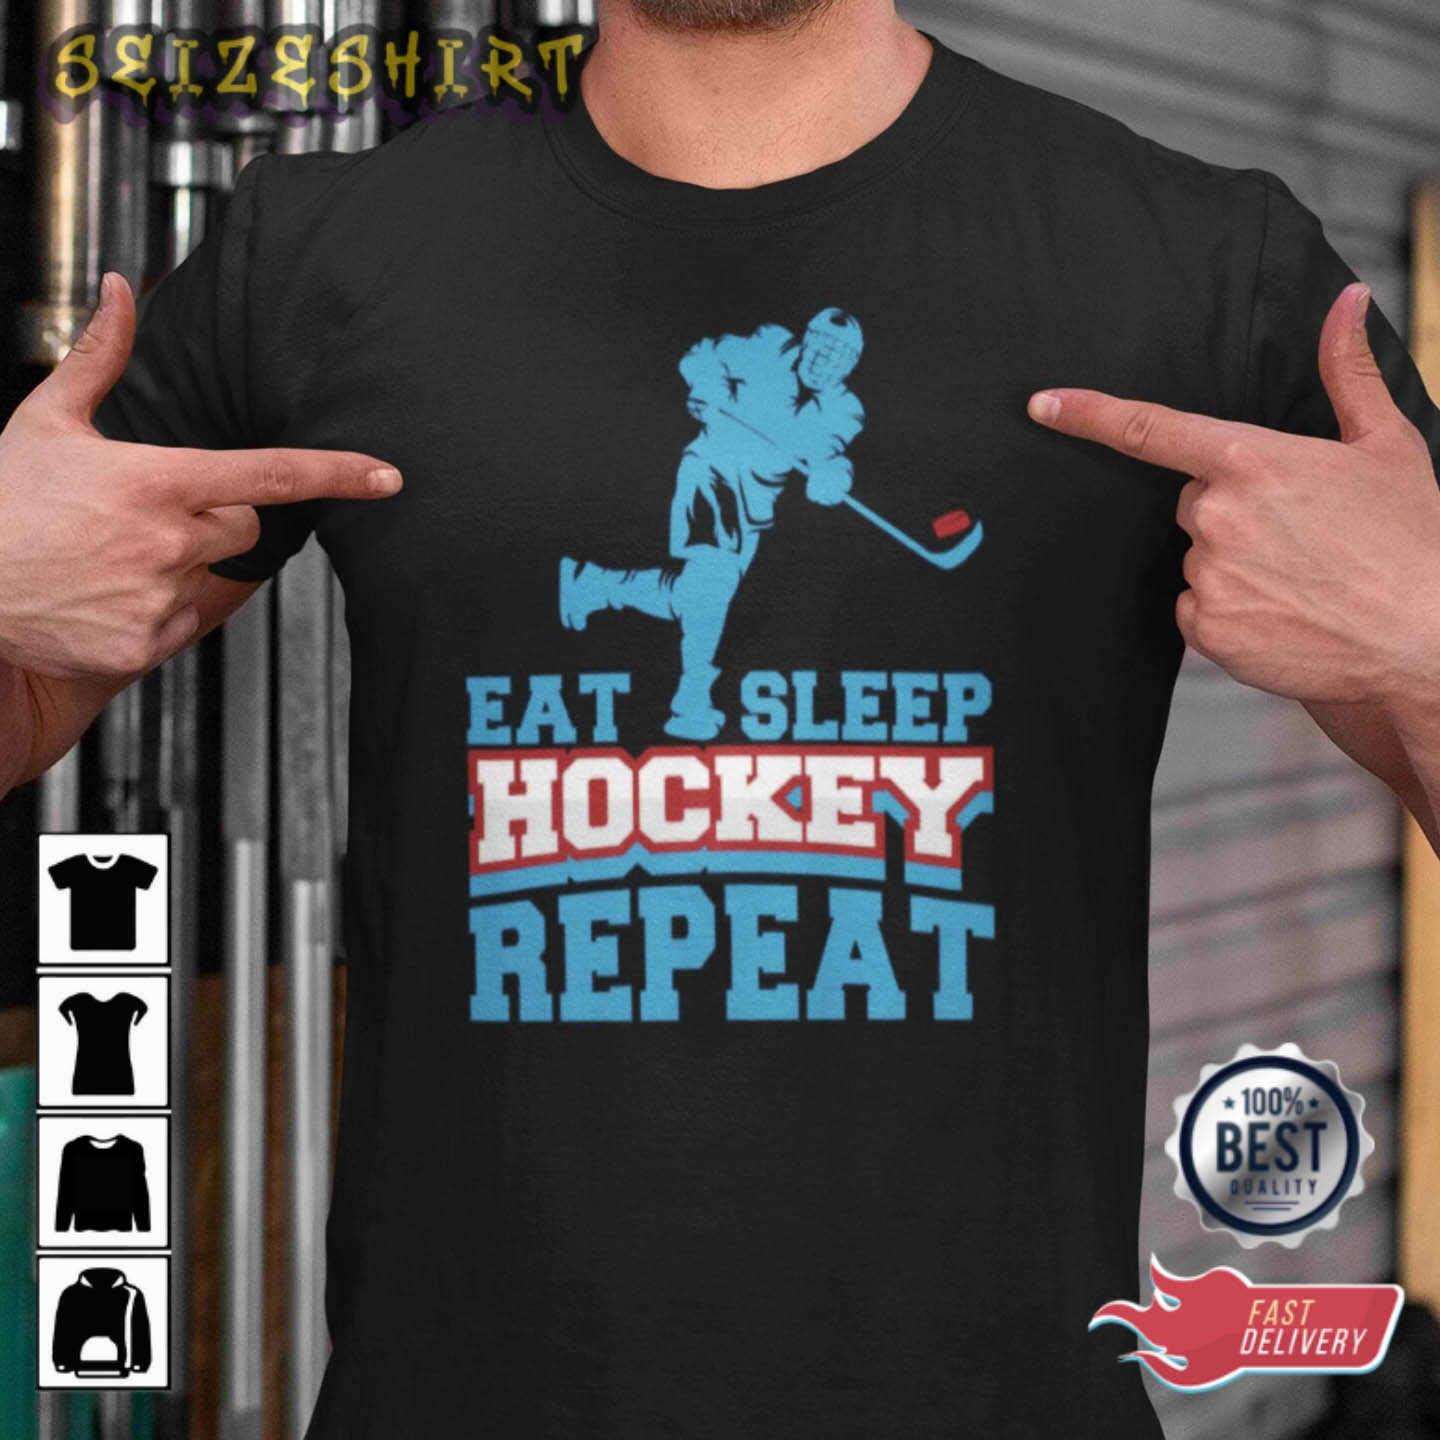 Eat Sleep Hockey Repeat T-Shirt - Gift for Hockey Players